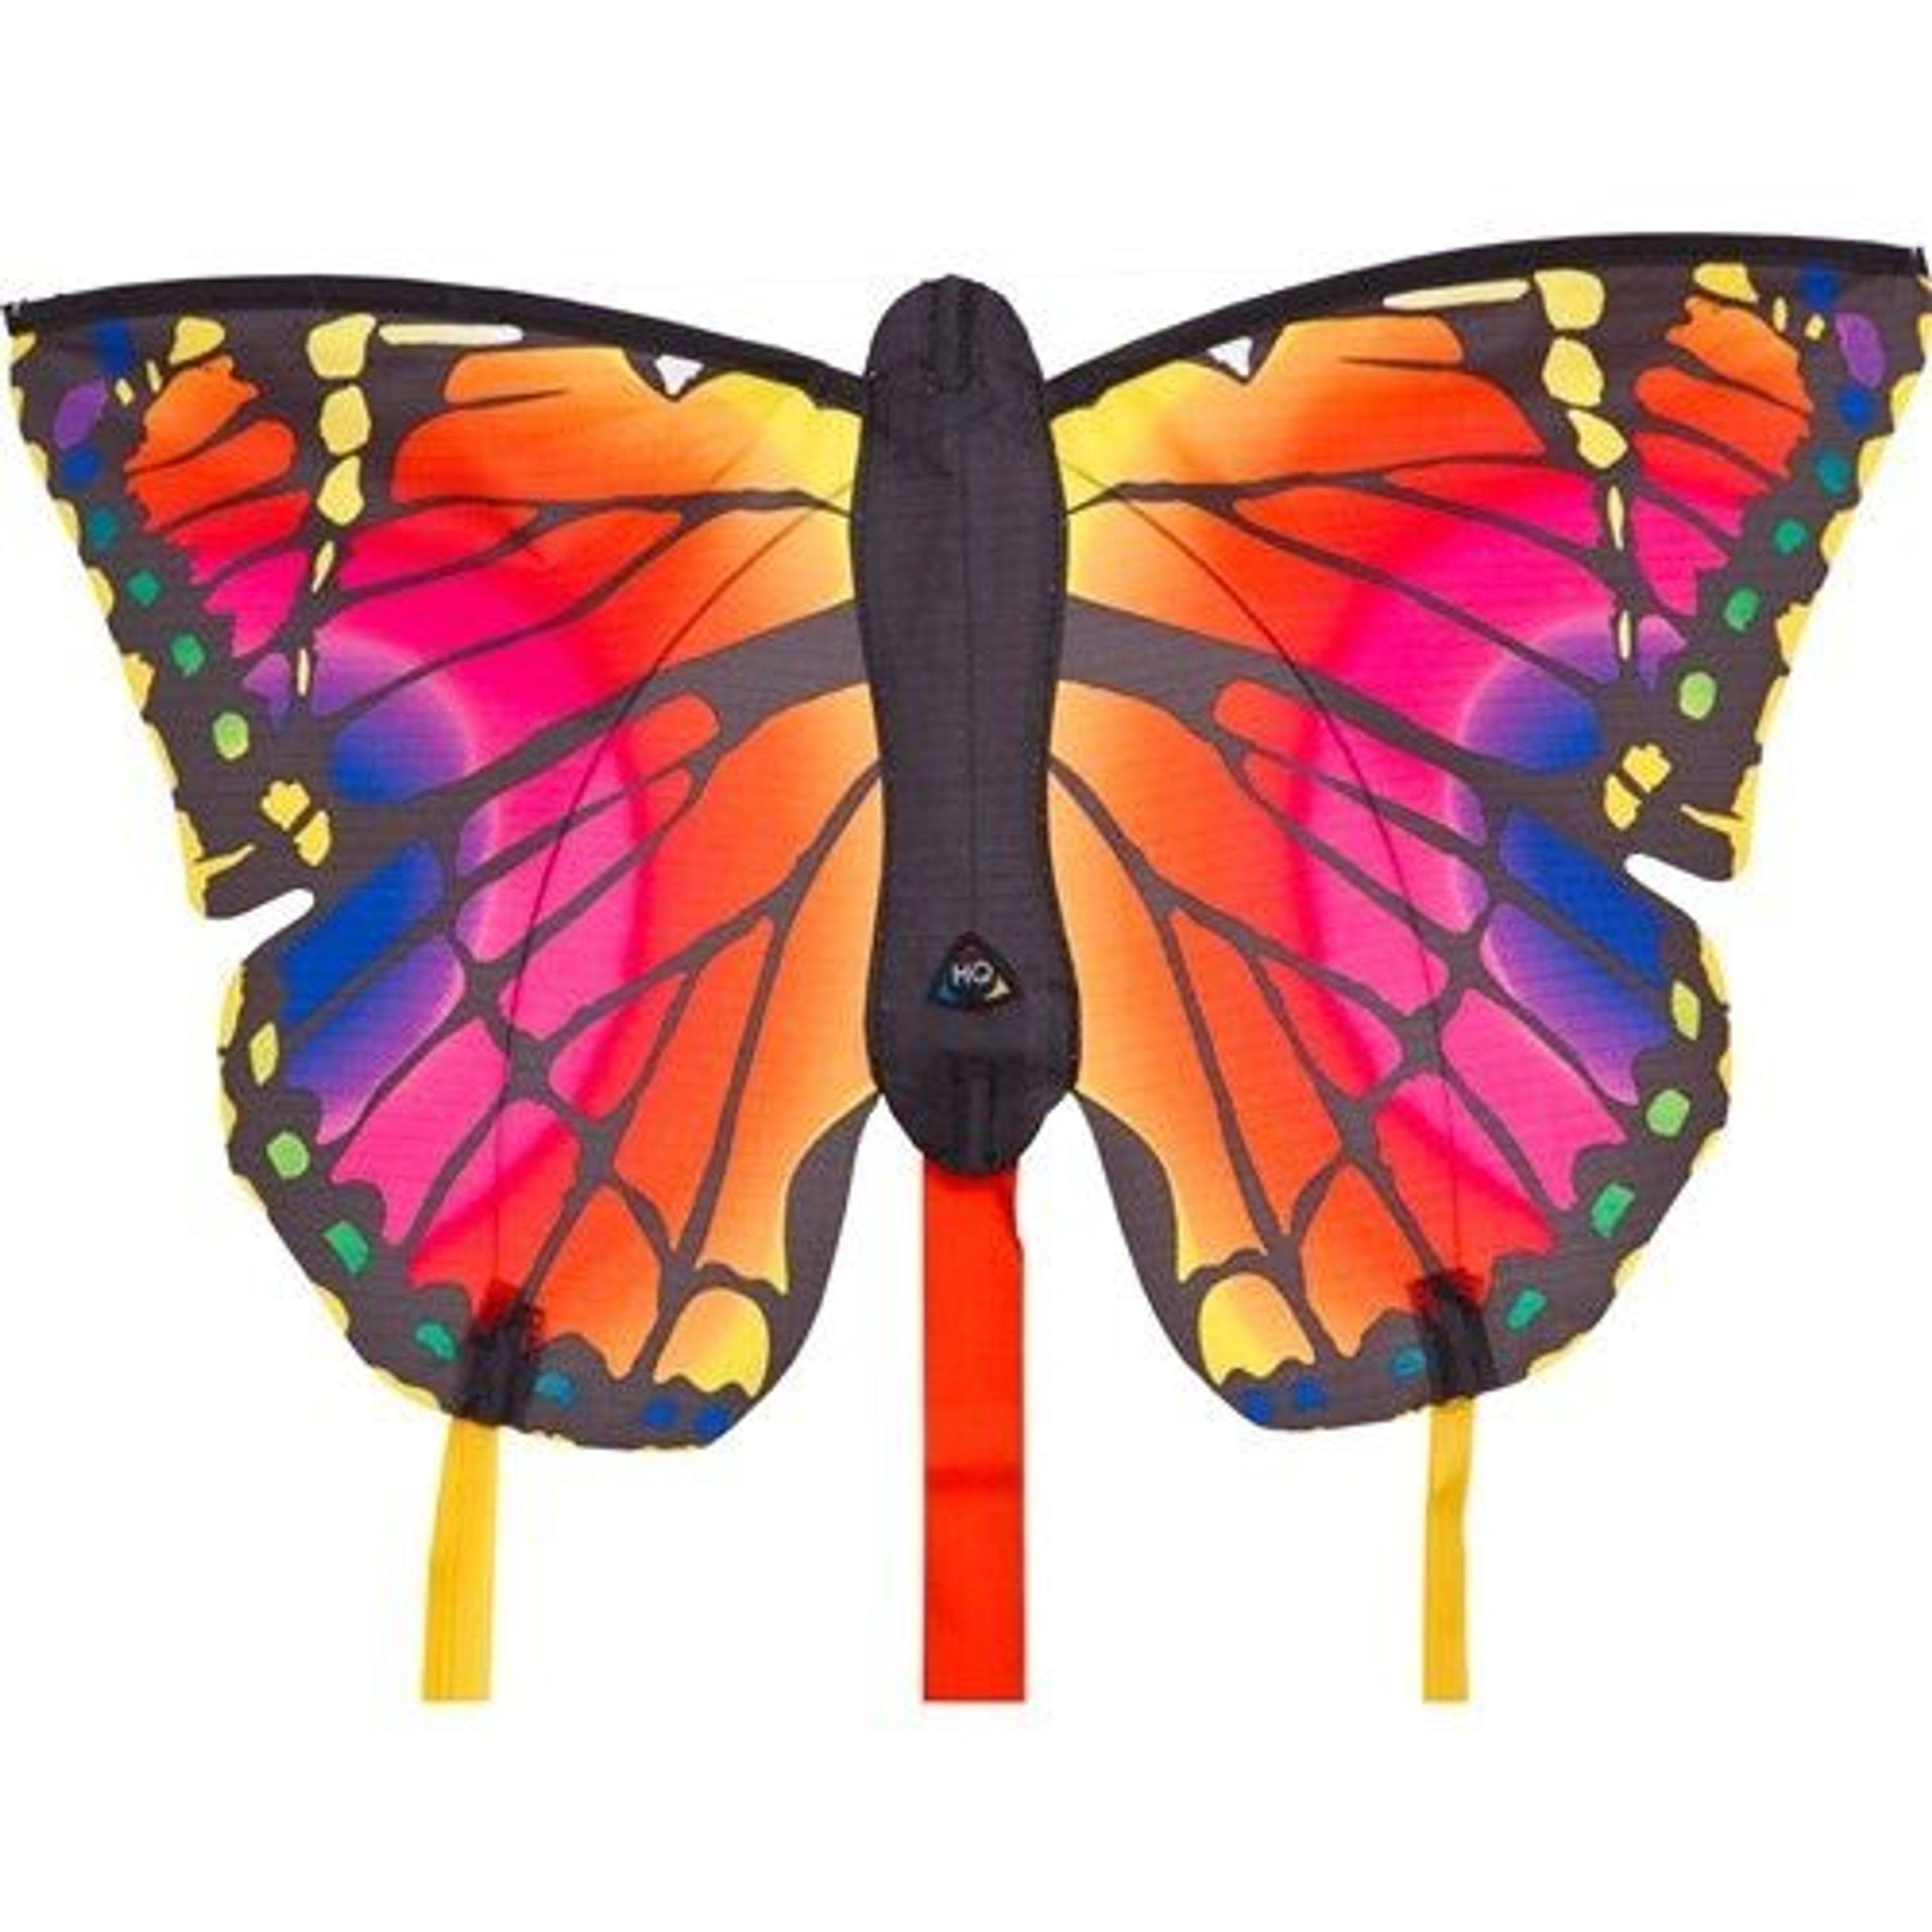 HQ Kites Butterfly Kite Emerald Single Line Kite - 50cm